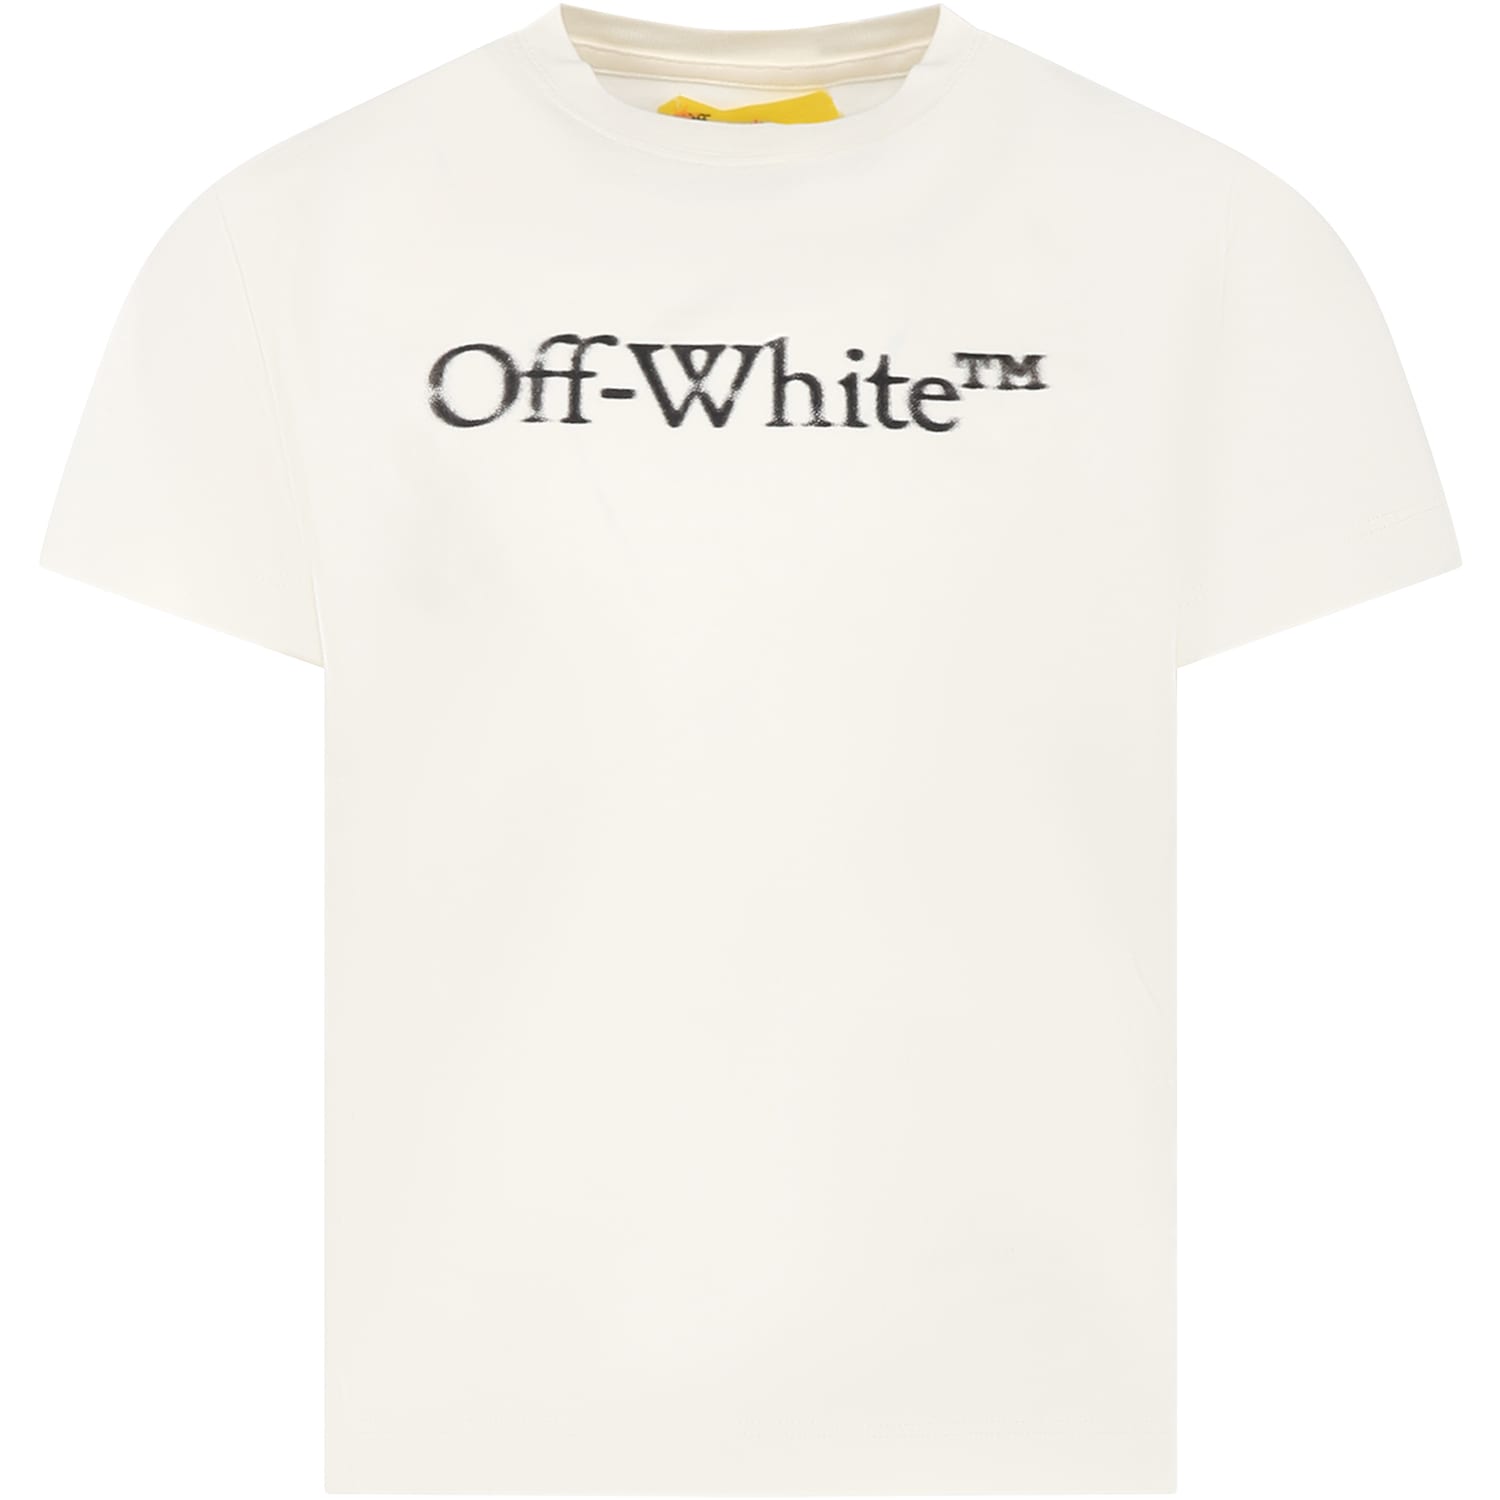 Off White Fall Winter 2018 Logo T Shirt Outlet | website.jkuat.ac.ke